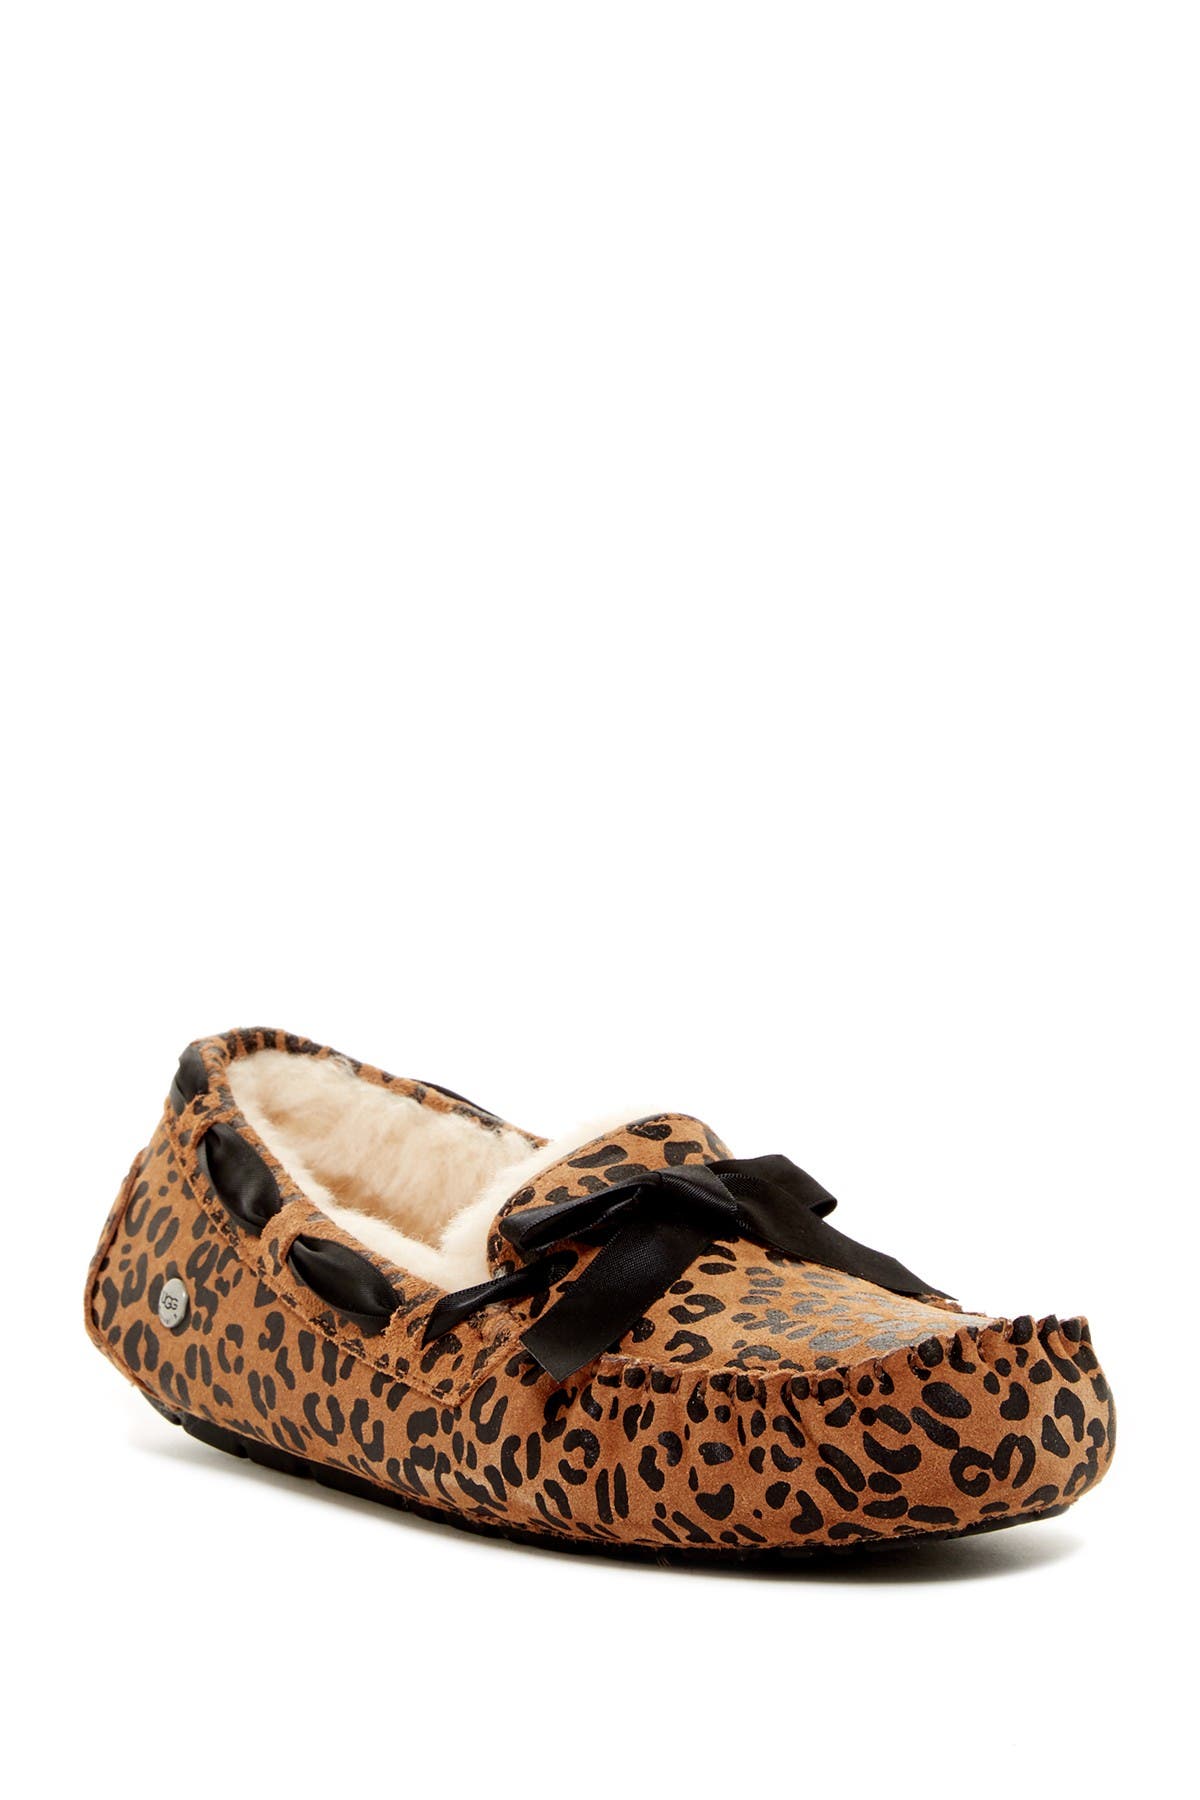 ugg leopard loafers